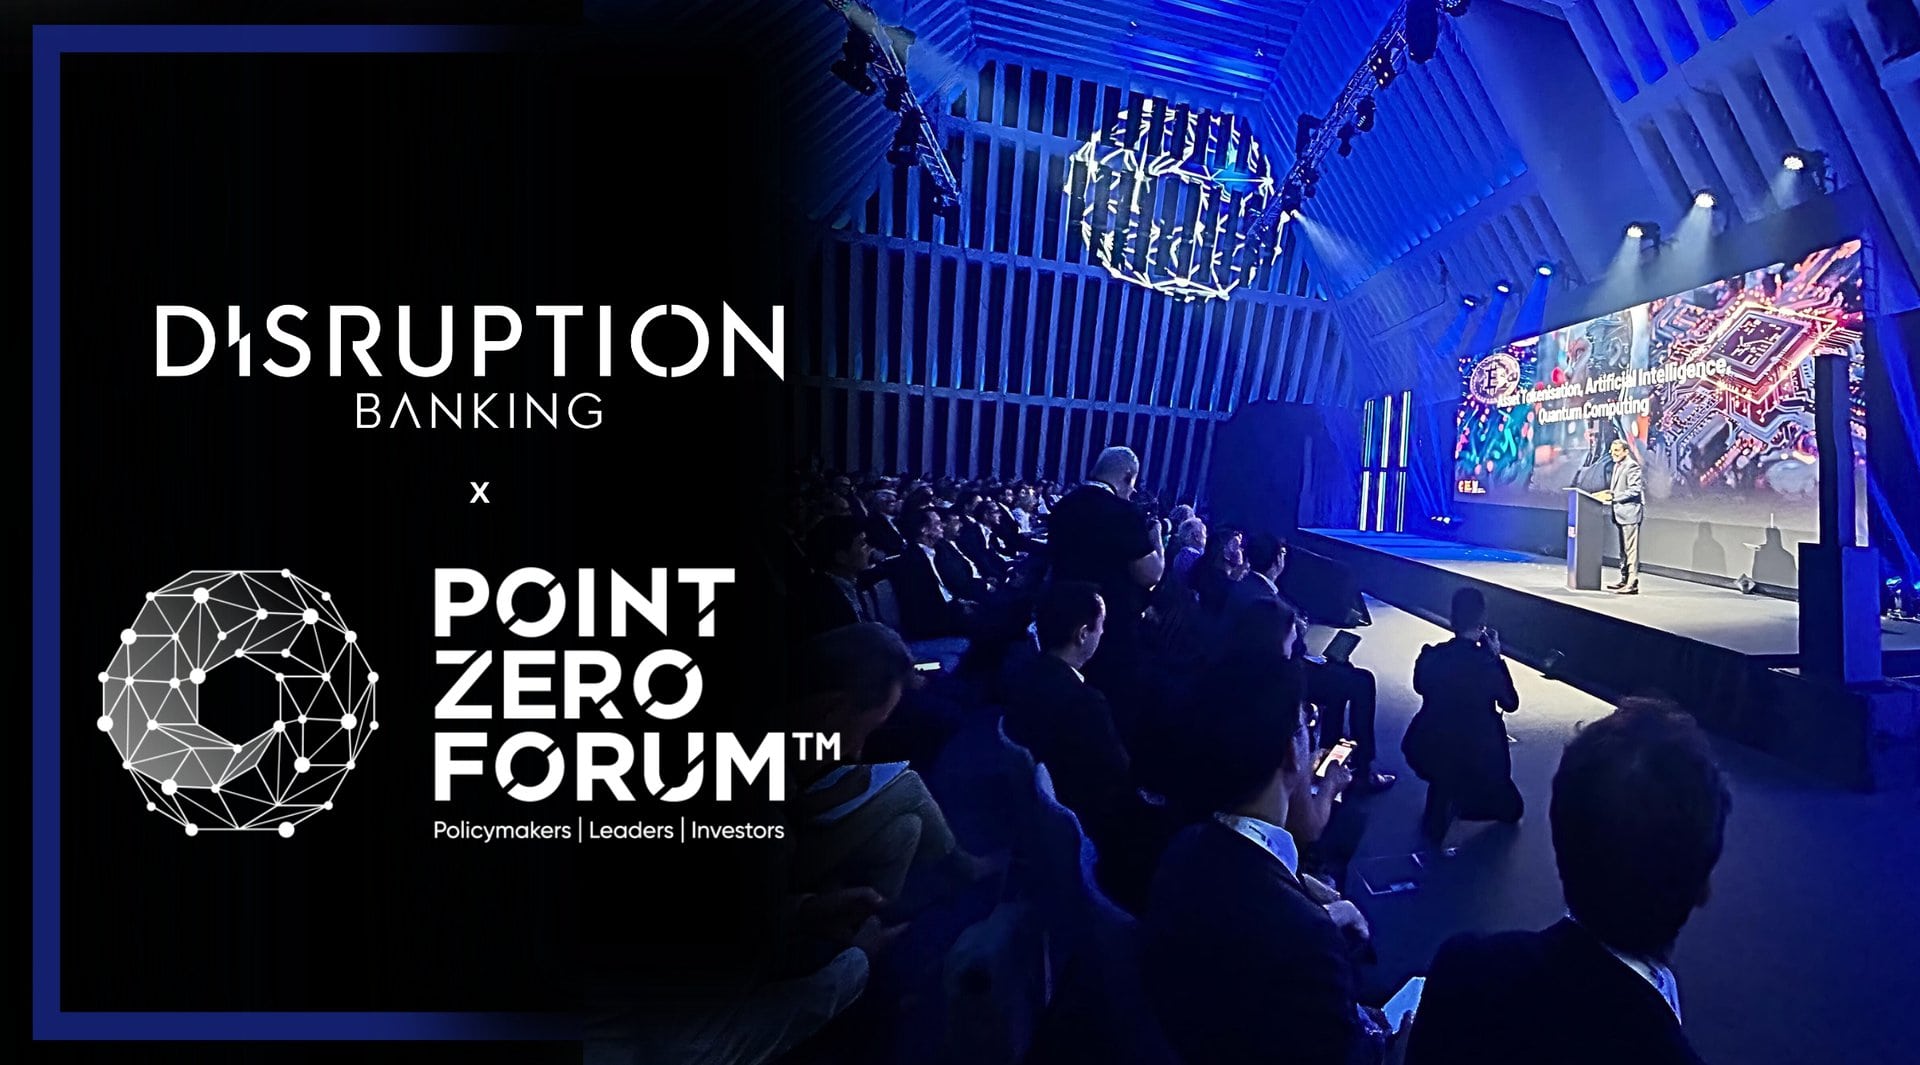 Disruption Banking at the Point Zero Forum